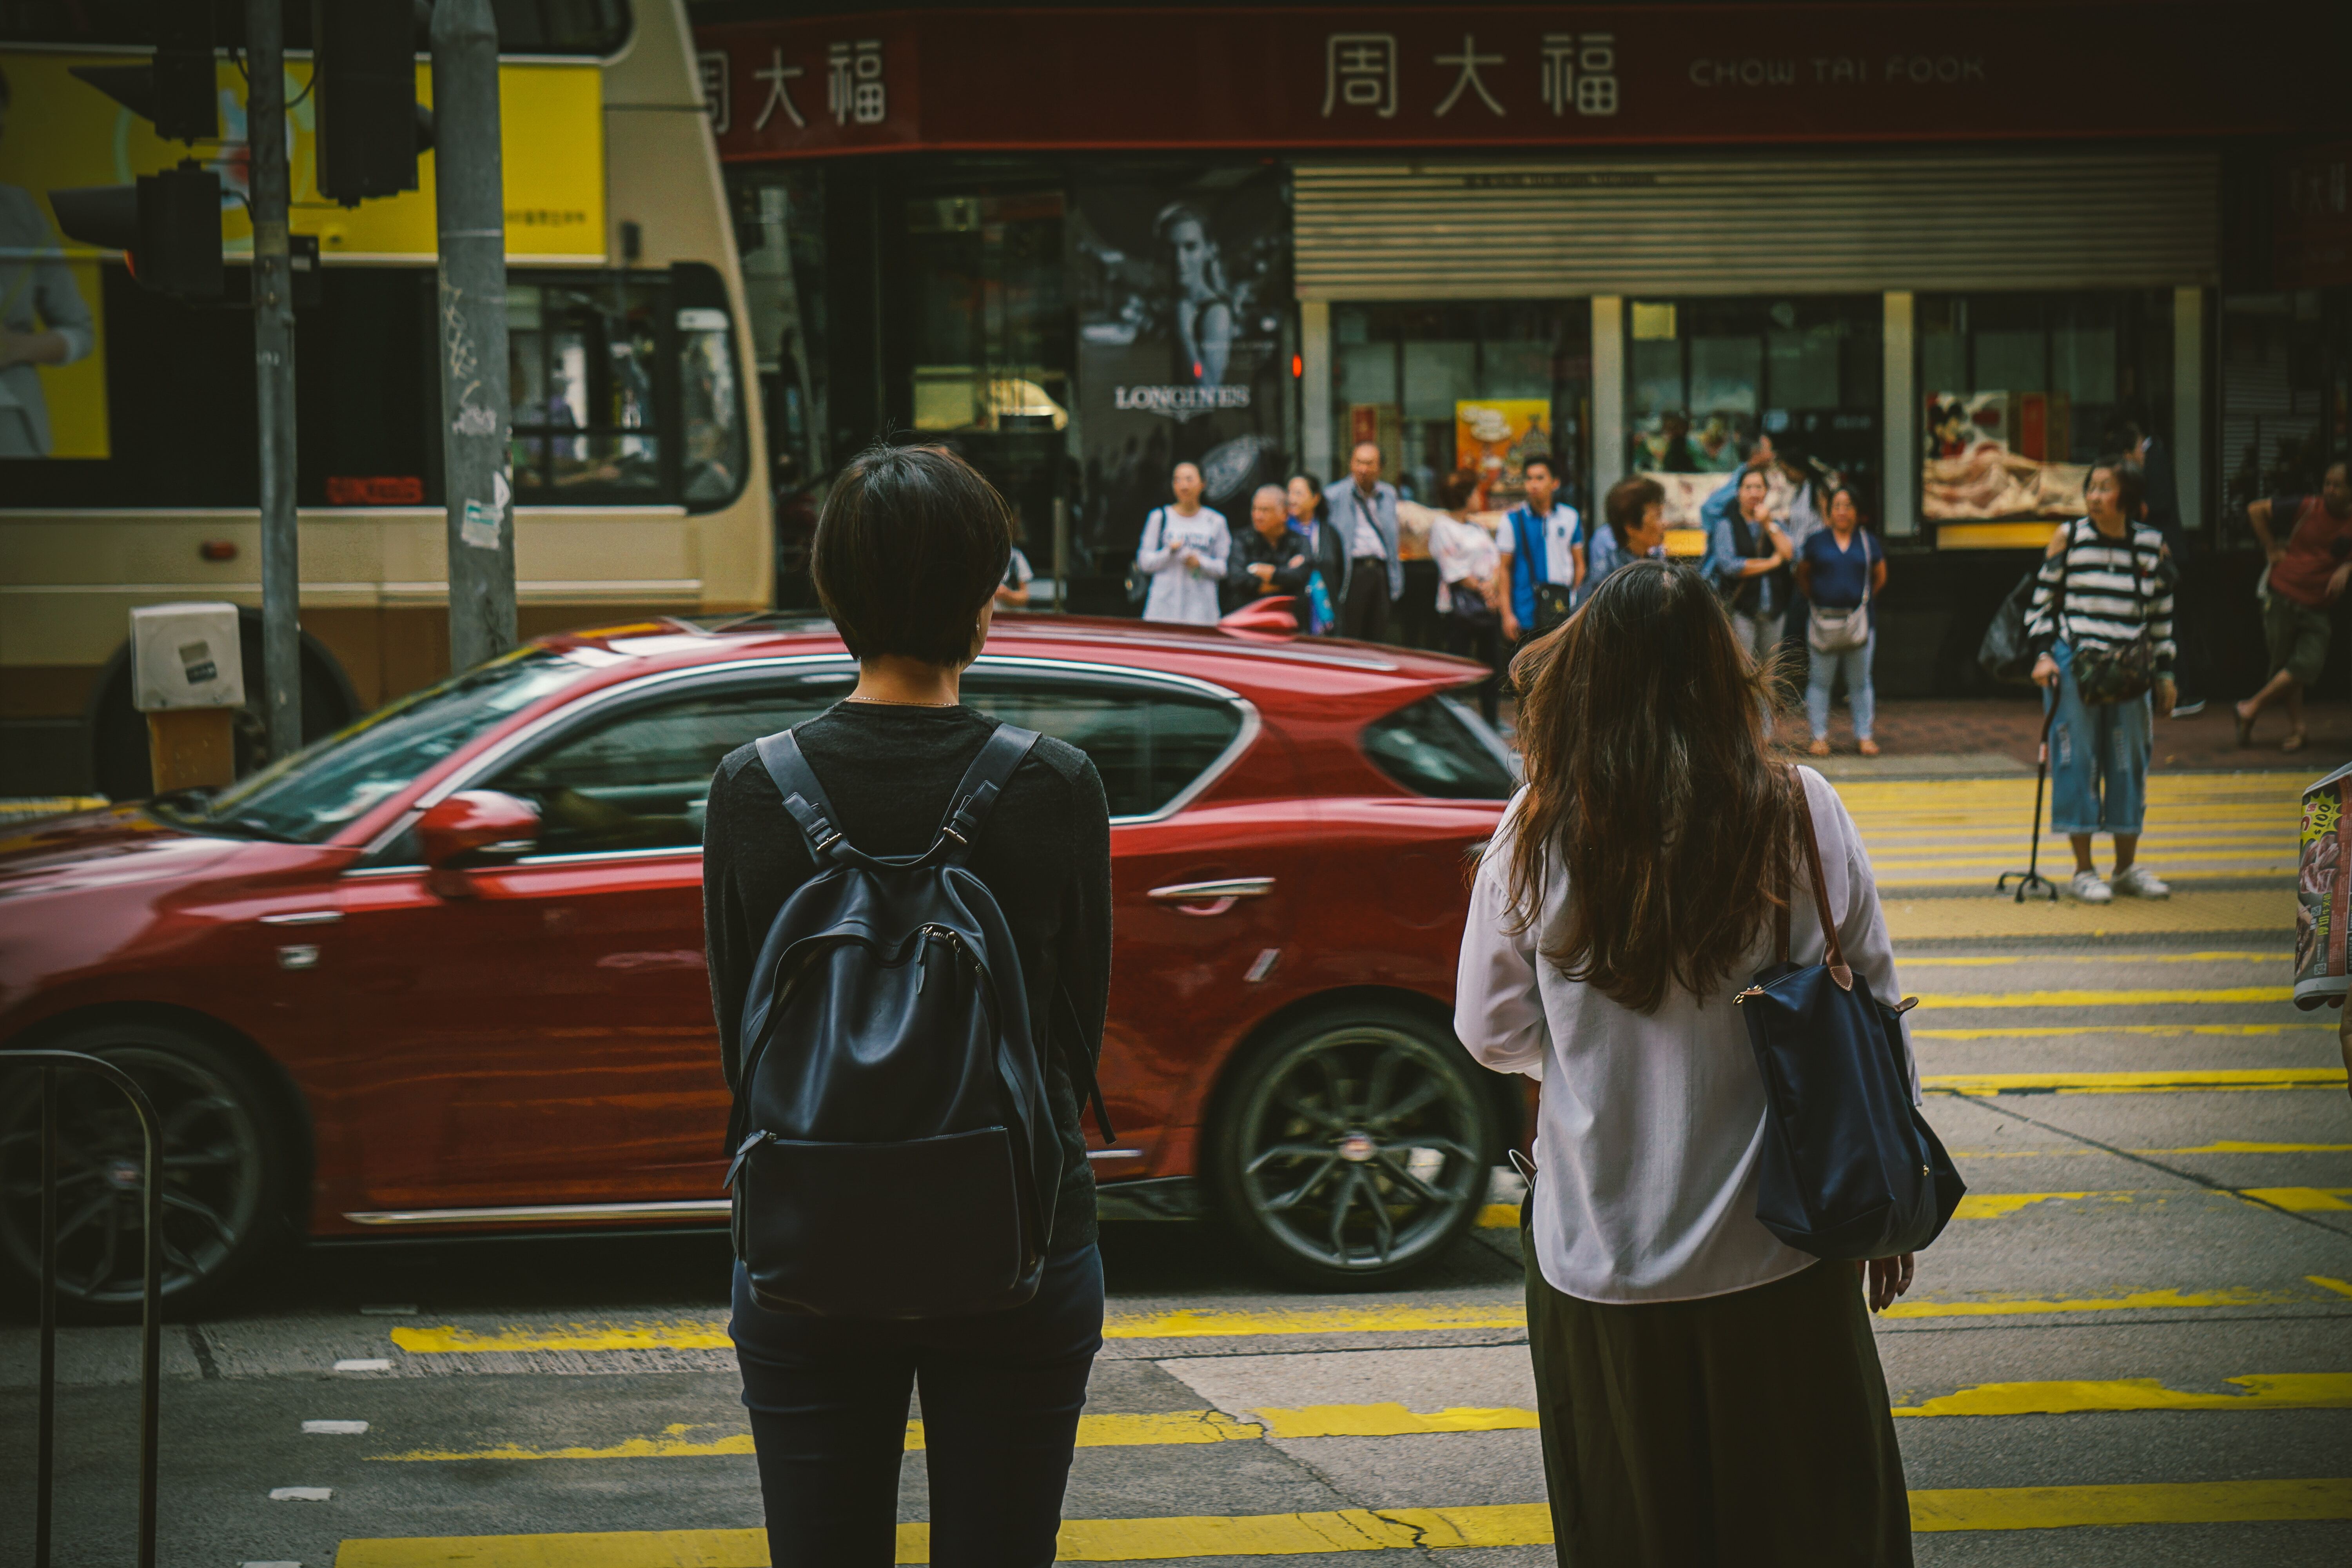 General Liability Car Insurance in Hong Kong